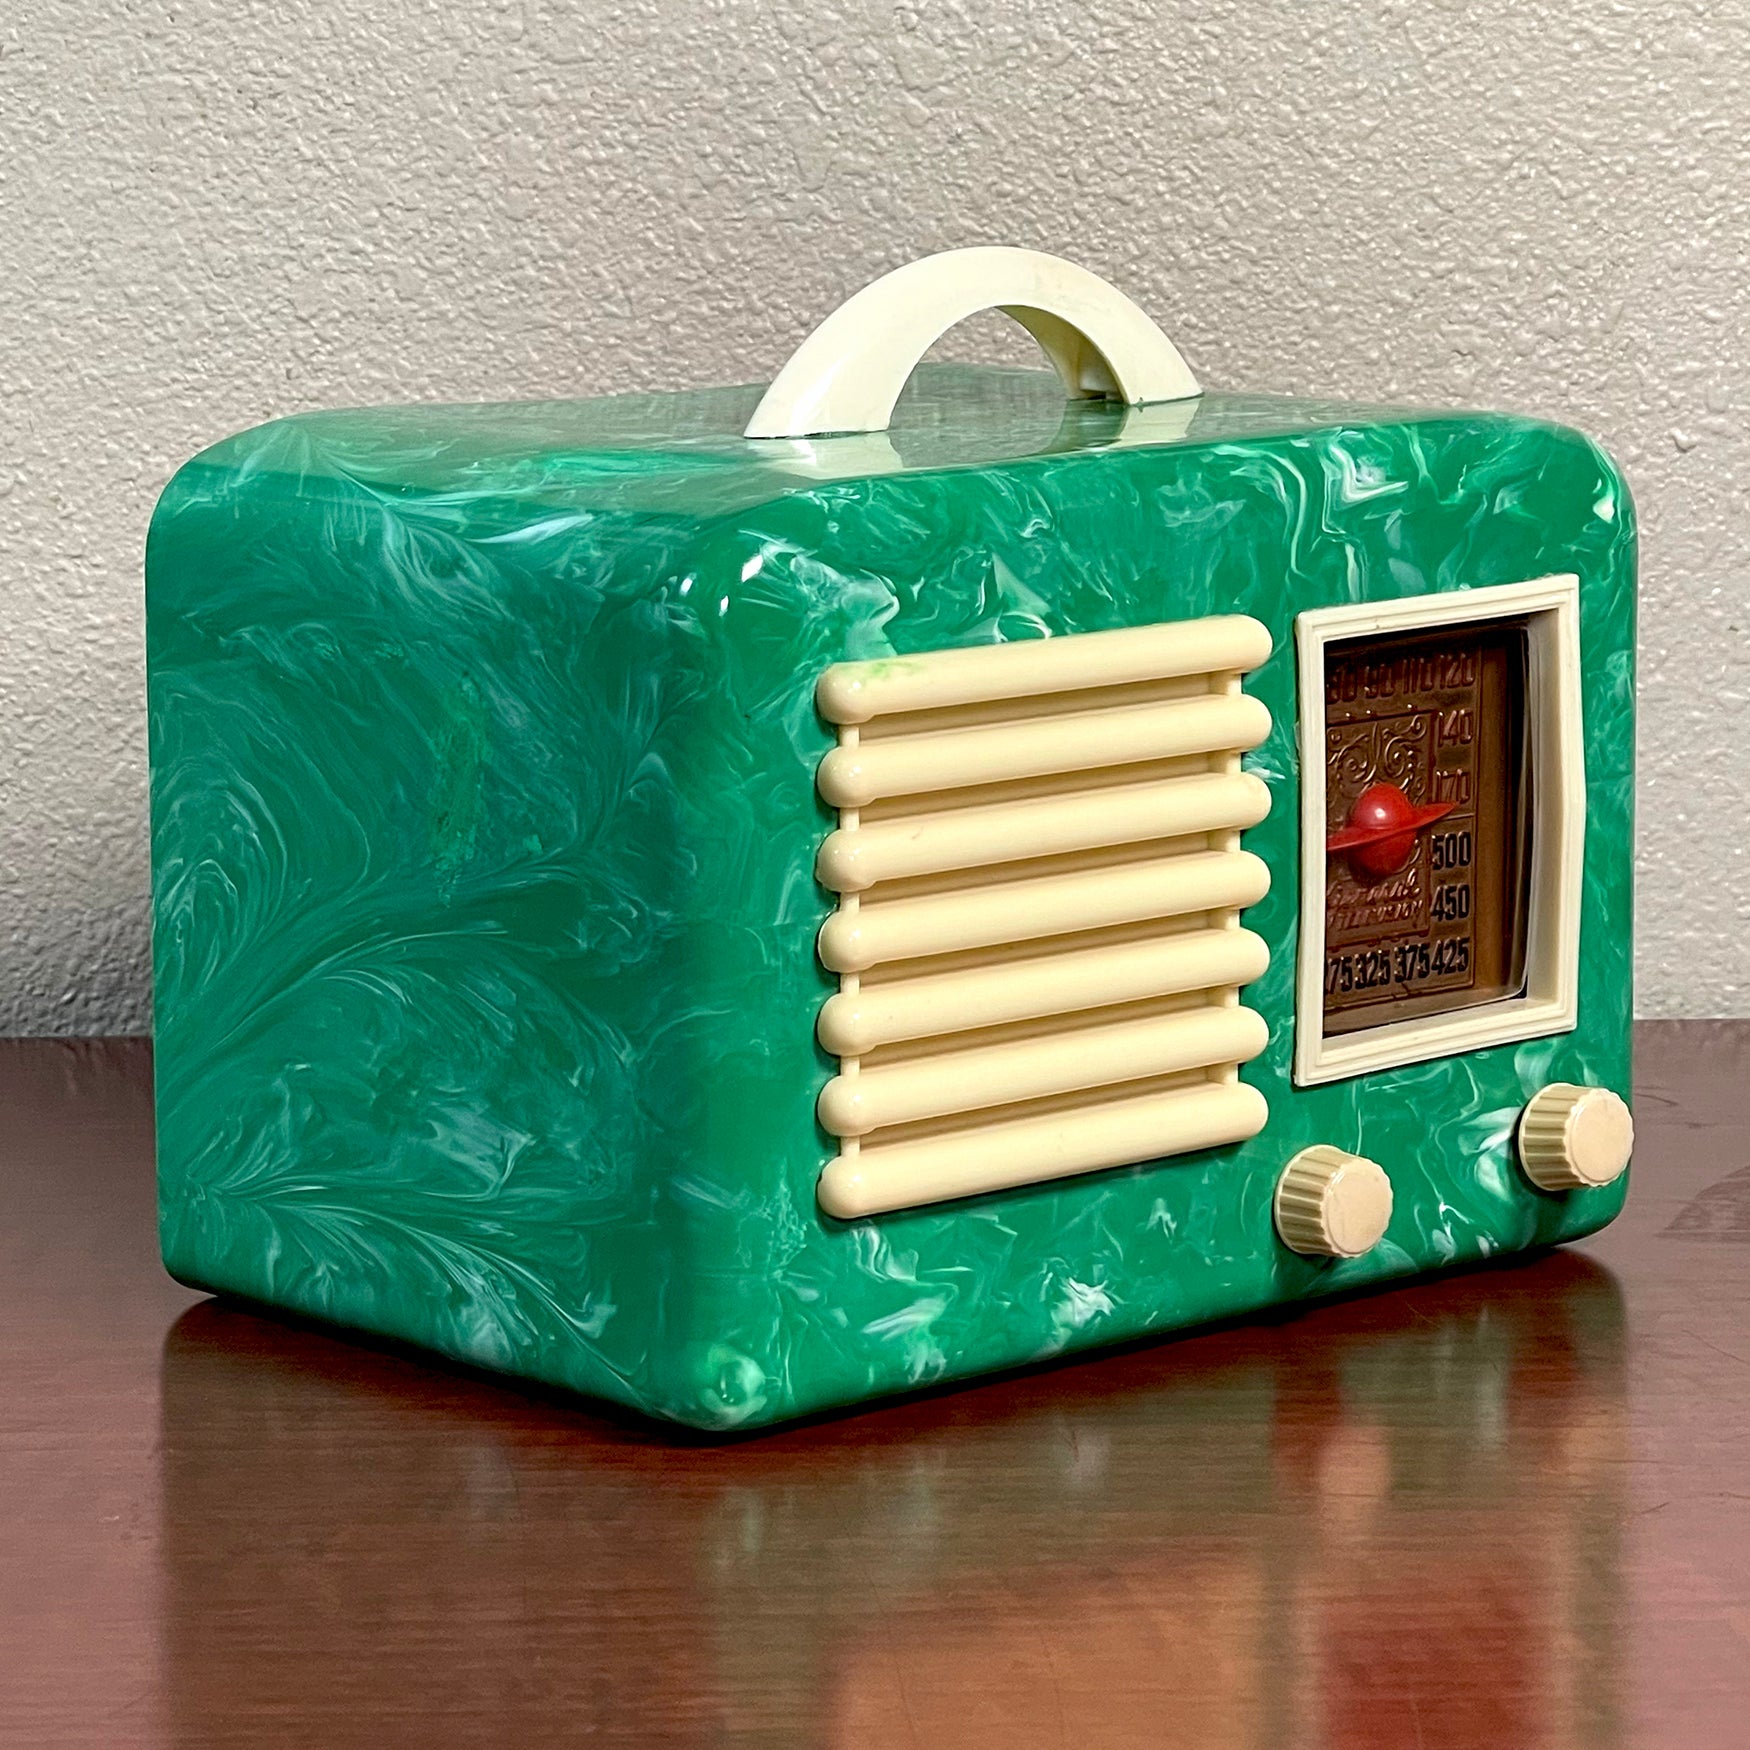 General Television A5A Green Swirl Bakelite Radio